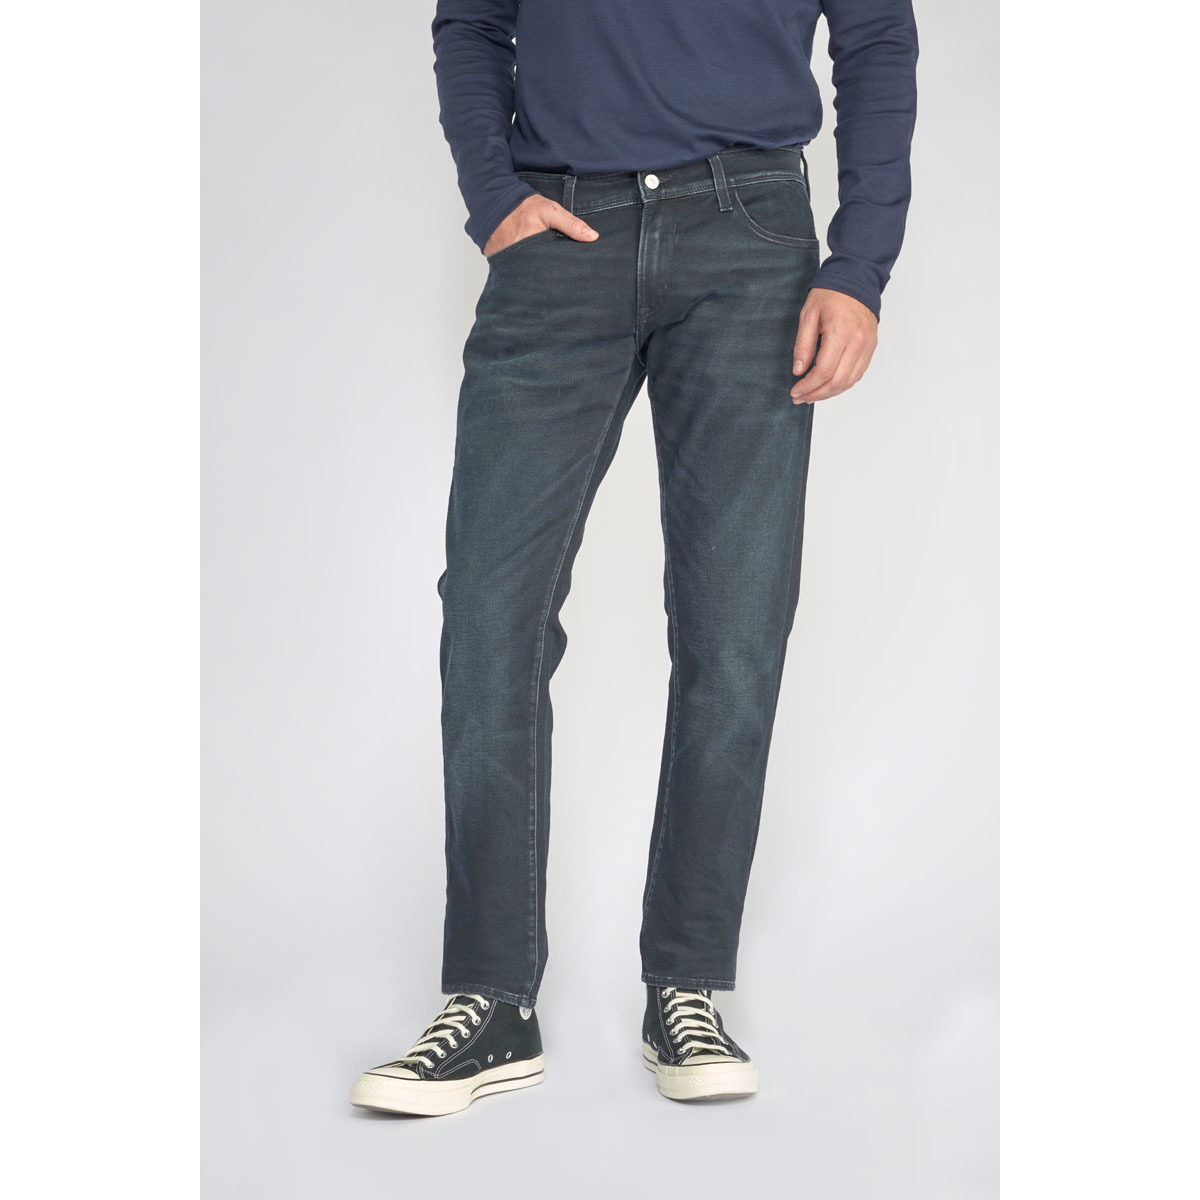 Le Temps des Cerises Bleu Jogg 700/11 adjusted jeans bleu-noir o4B4wGWs